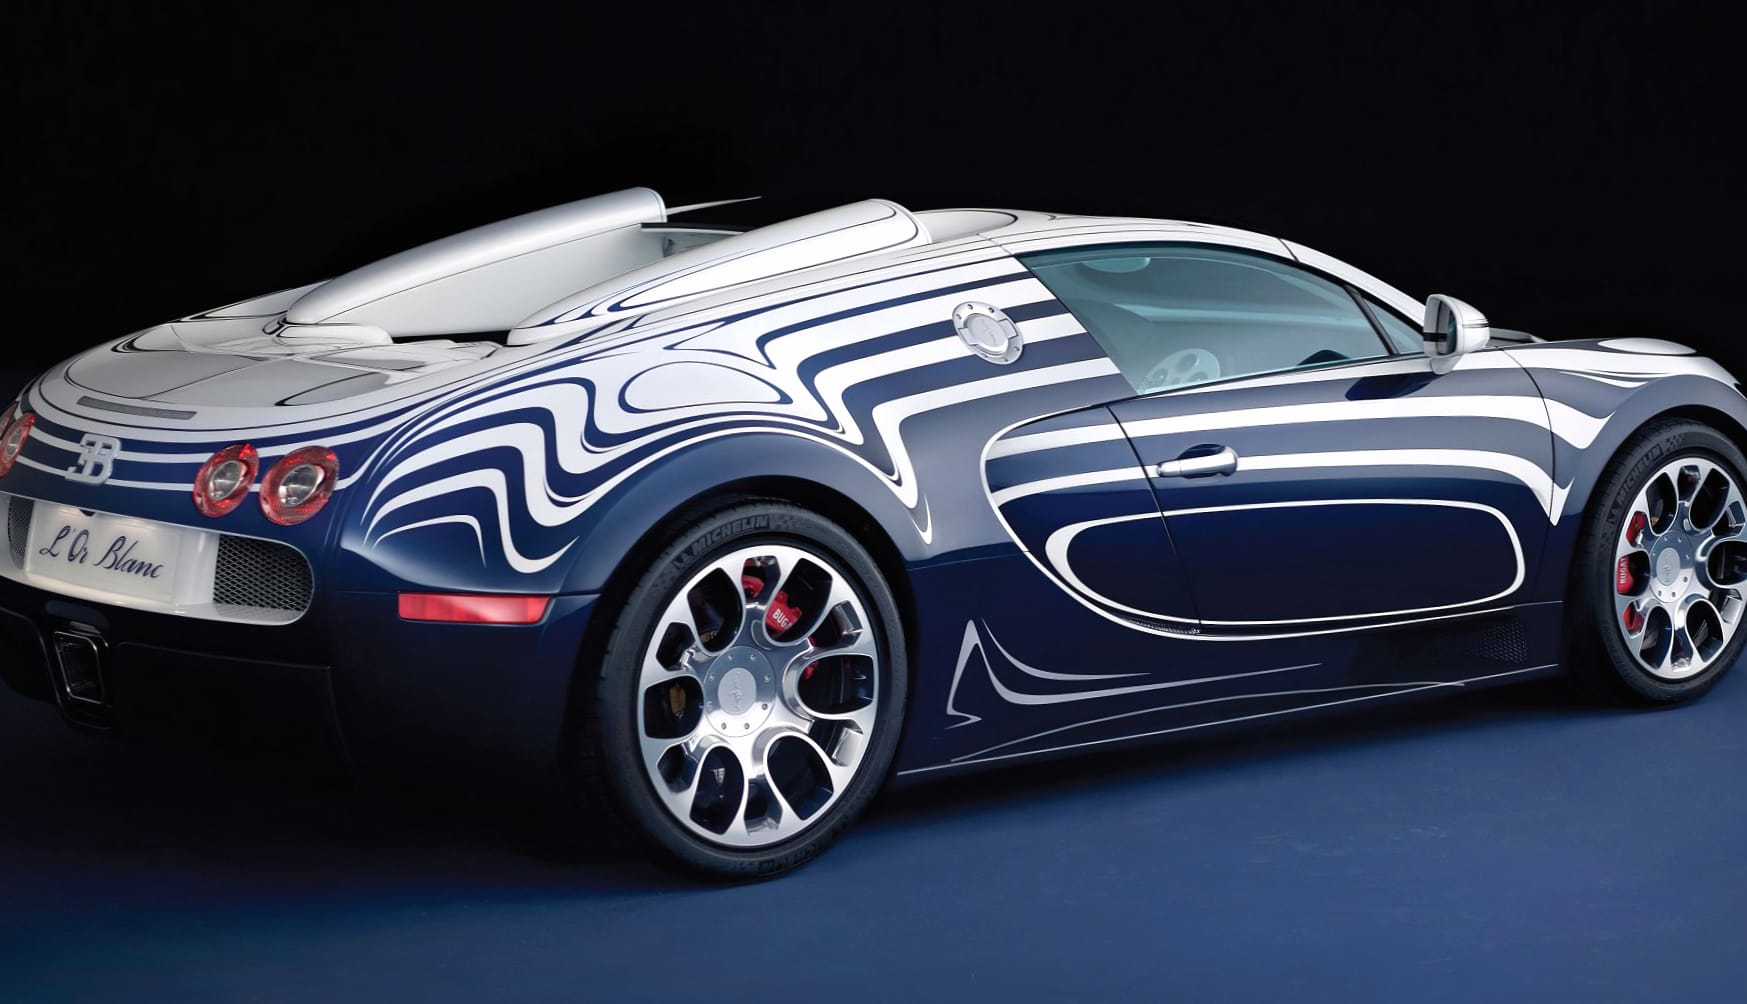 Bugatti Veyron Grand Sport LOr Blanc at 1024 x 768 size wallpapers HD quality